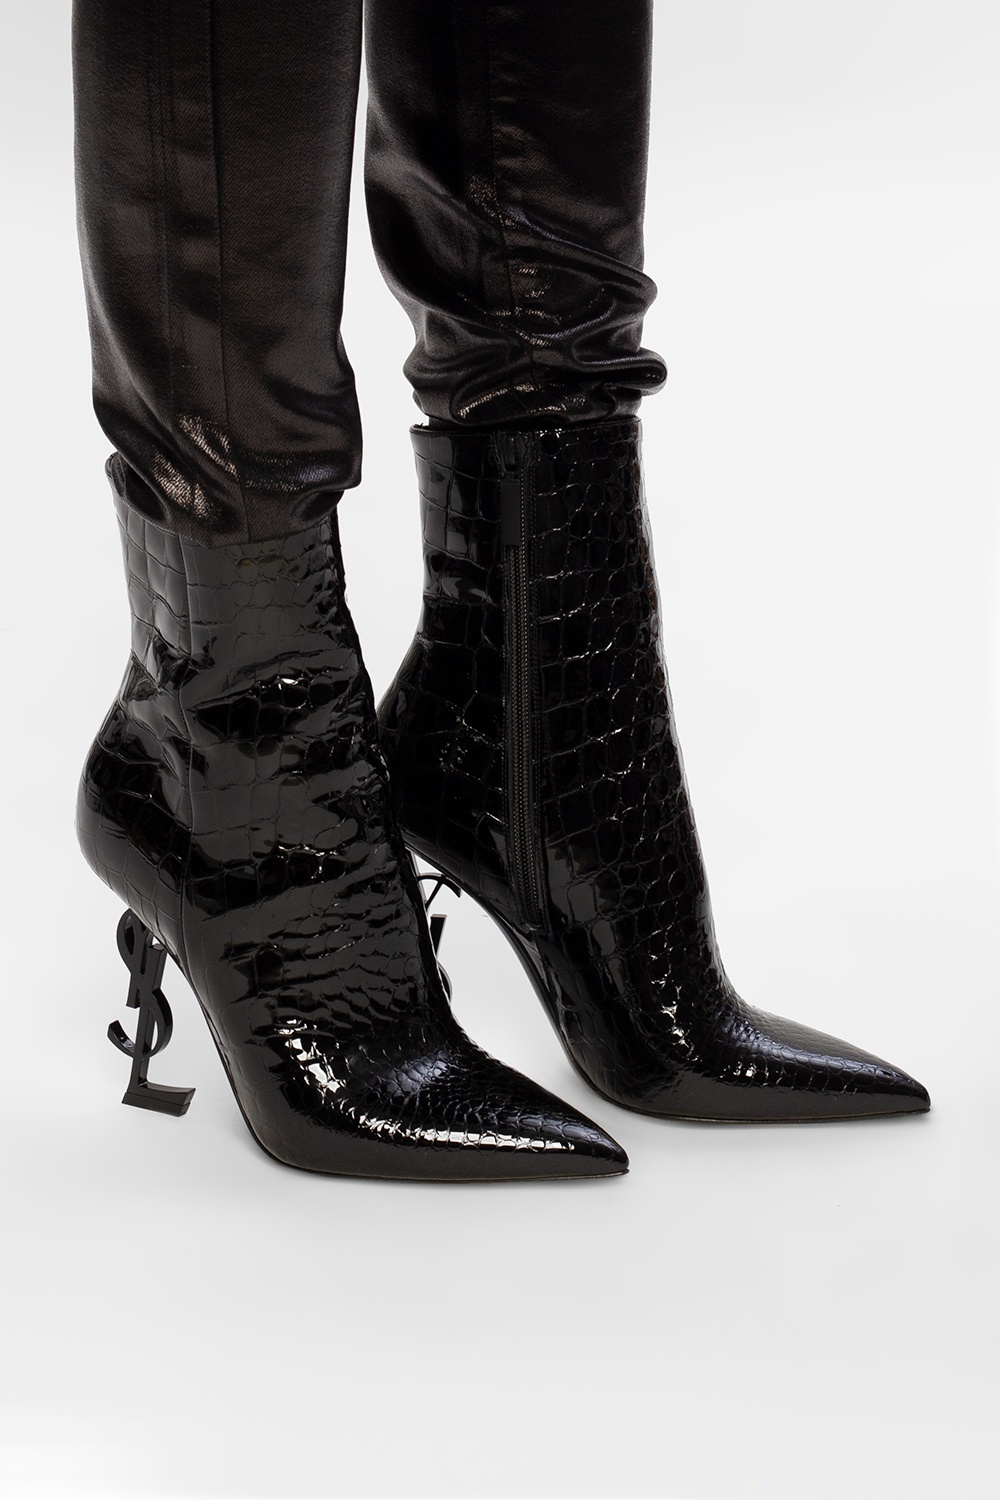 Saint Laurent ‘Opyum’ heeled ankle boots